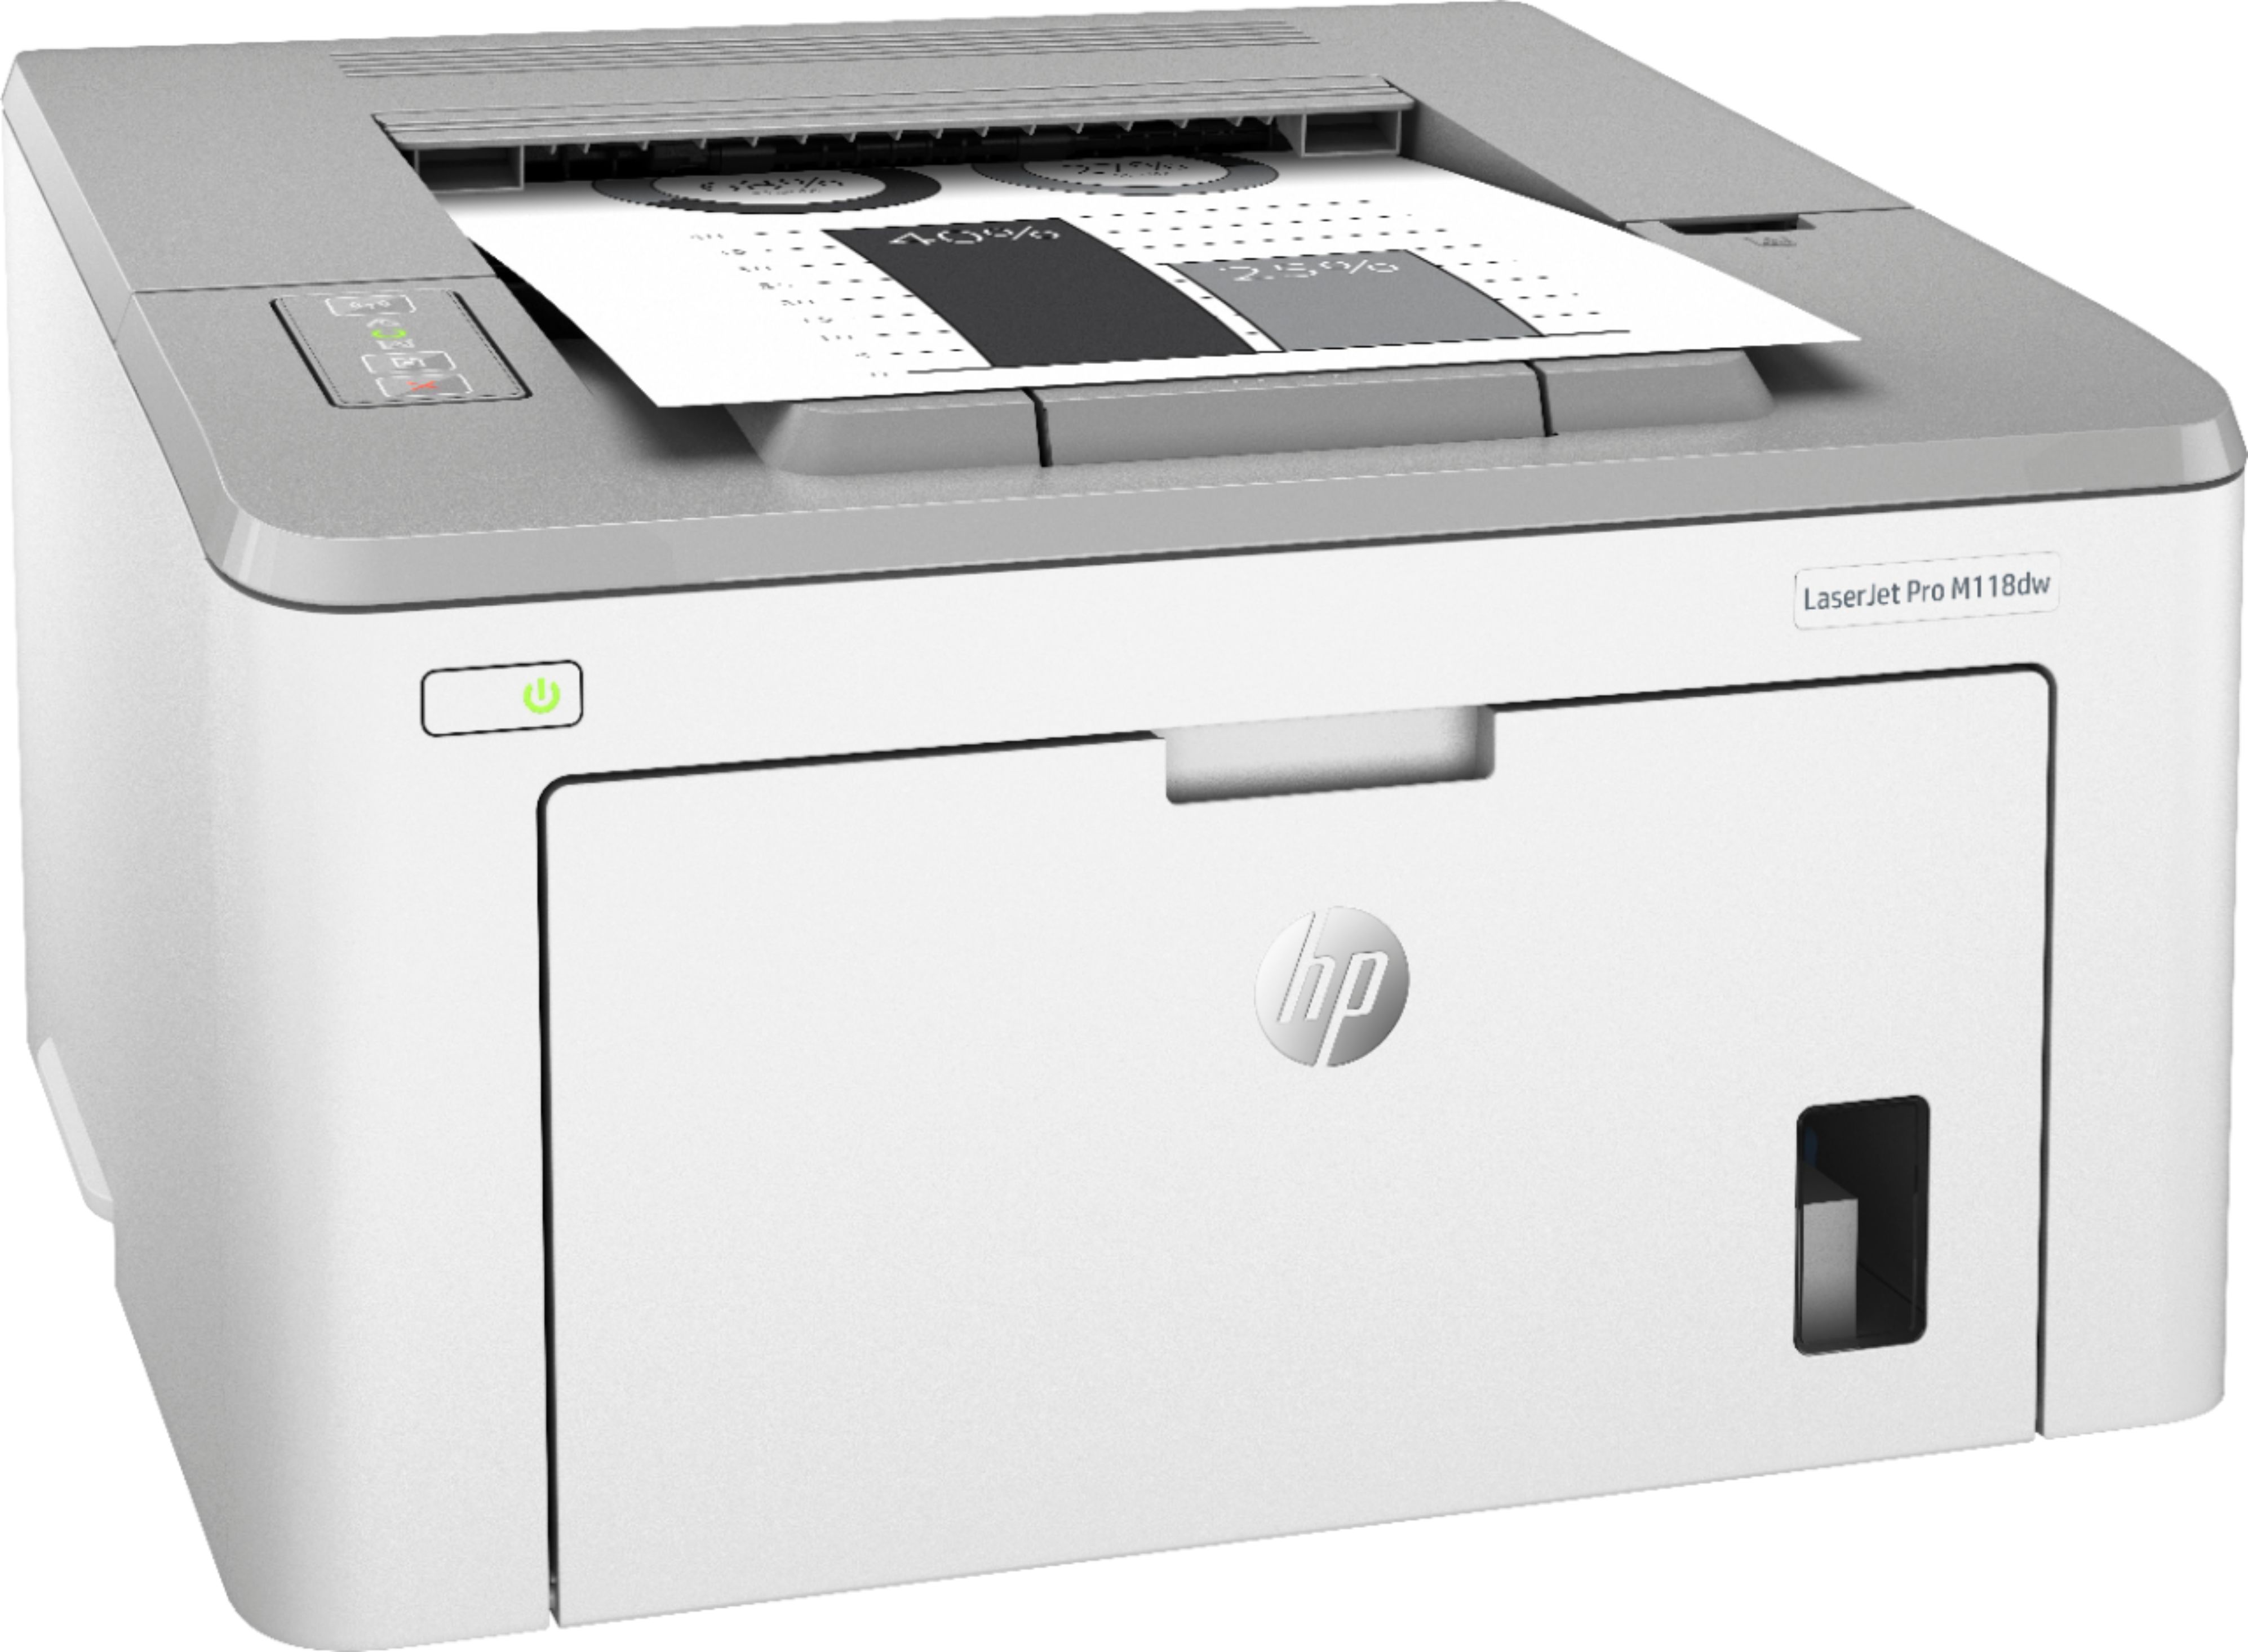 Off-White And Gray HP LaserJet Pro M118DW Wireless Black-and-White Printer